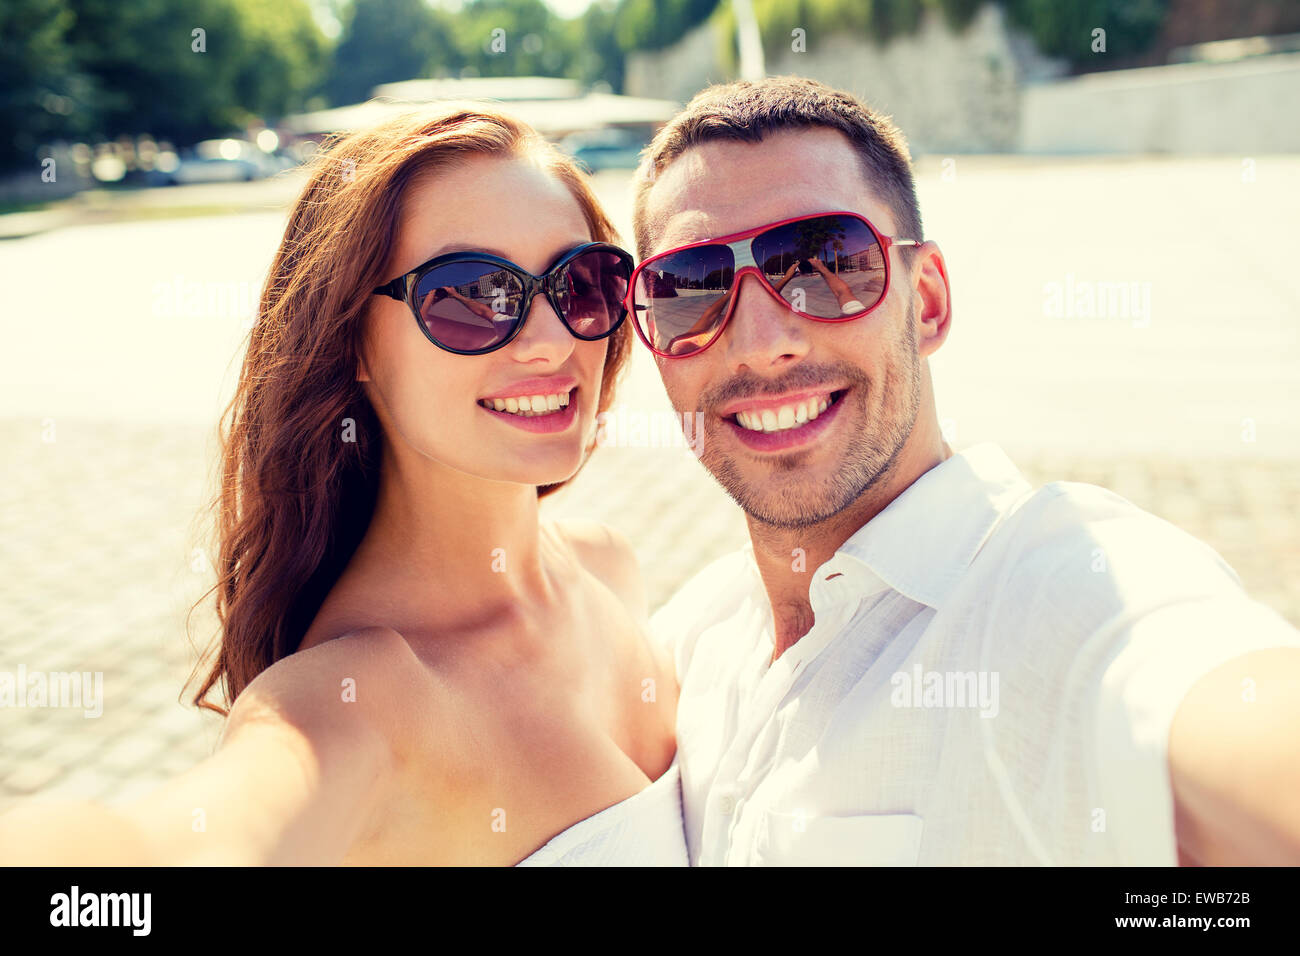 Smiling couple wearing sunglasses décisions selfies Banque D'Images